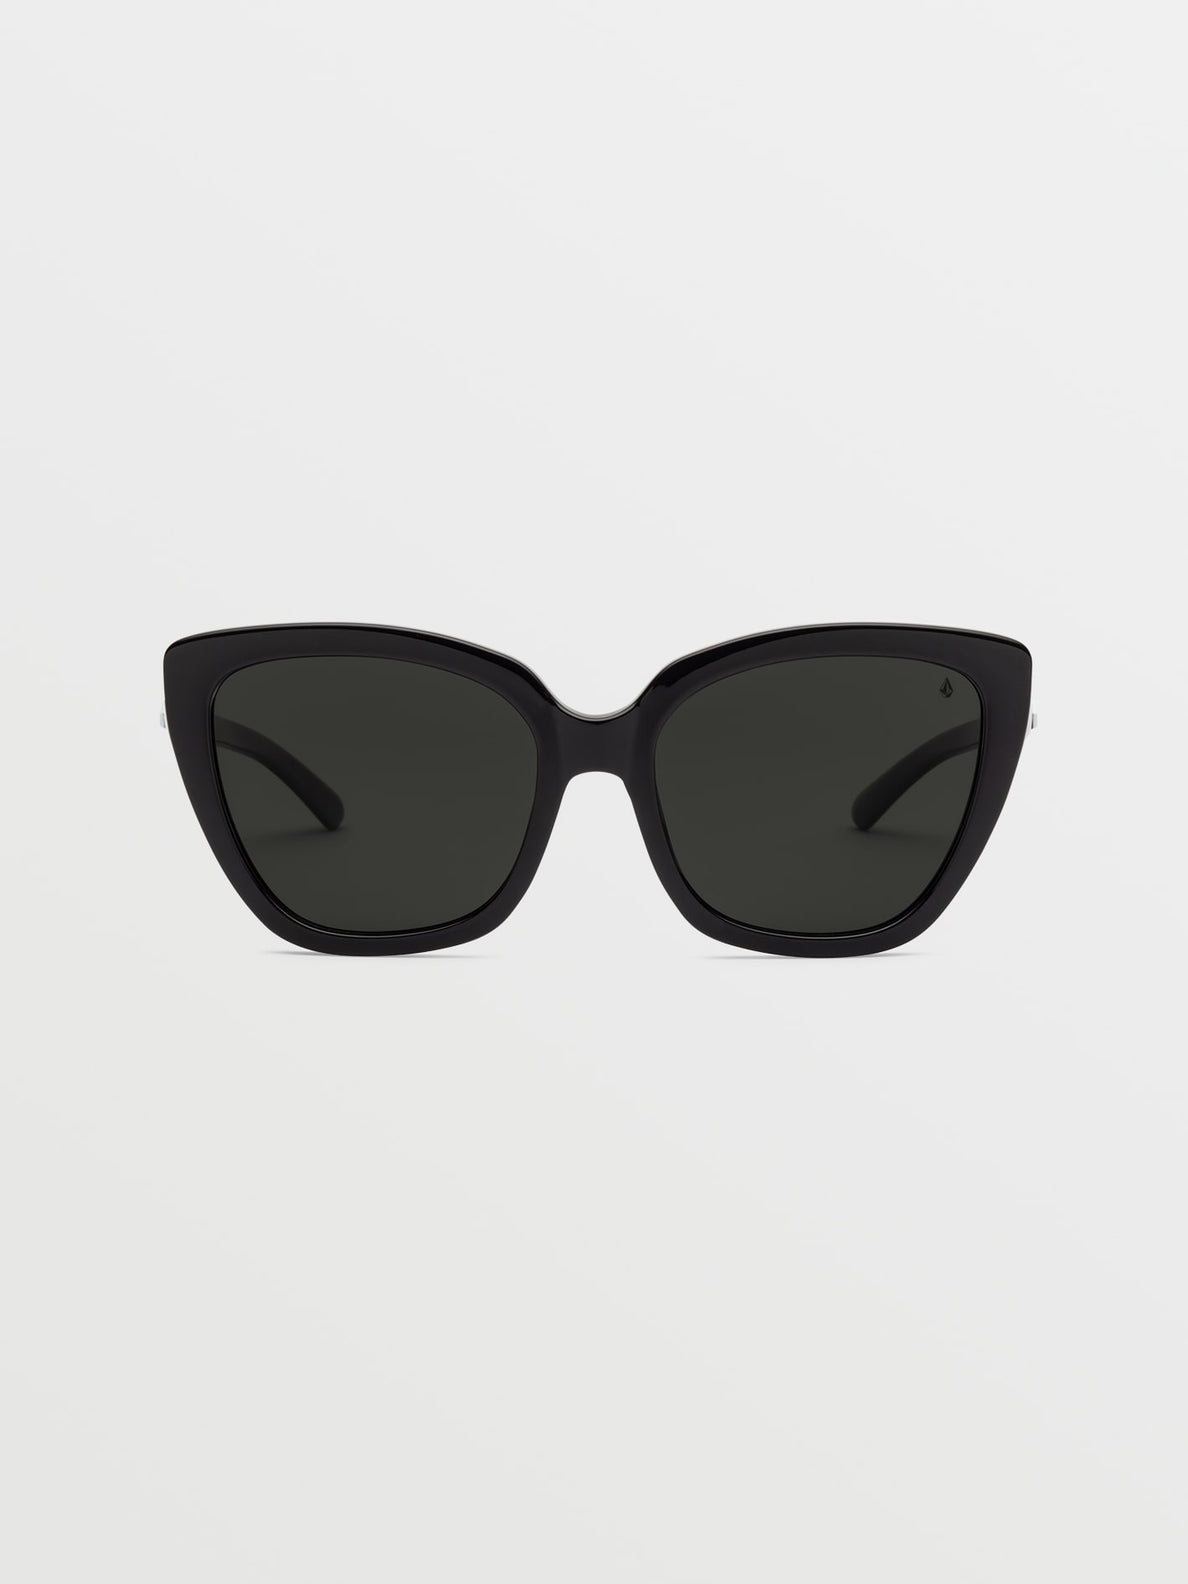 Milli Sunglasses - Gloss Black/Gray Polar (VE03600202_0000) [F]